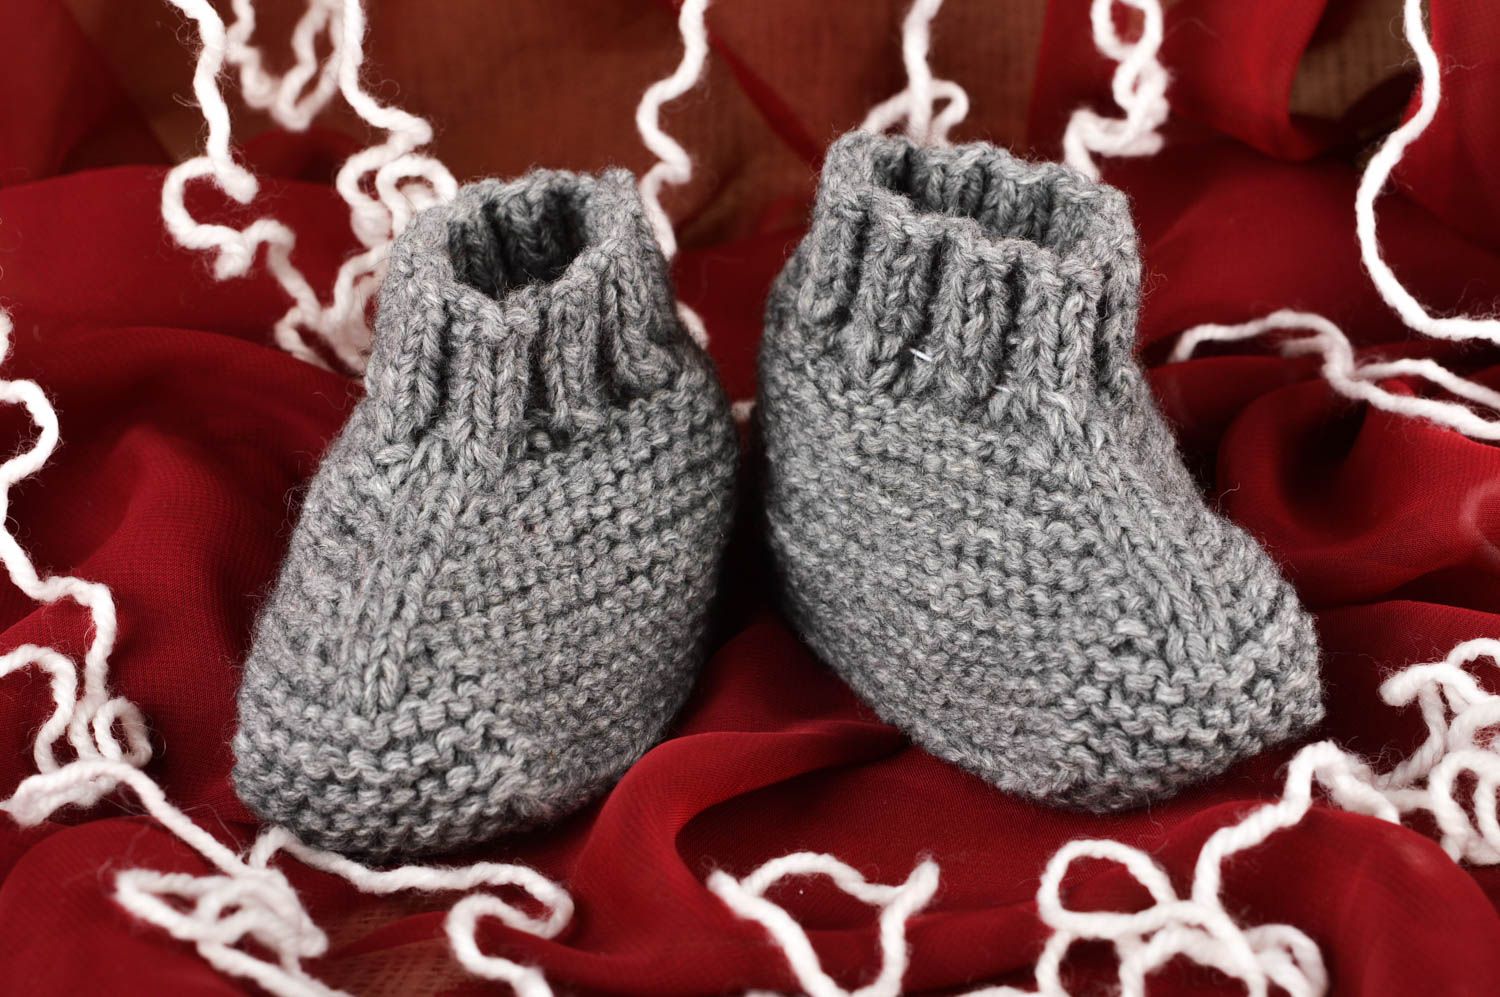 Handmade crocheted baby bootees cute warm socks beautiful baby clothes photo 1